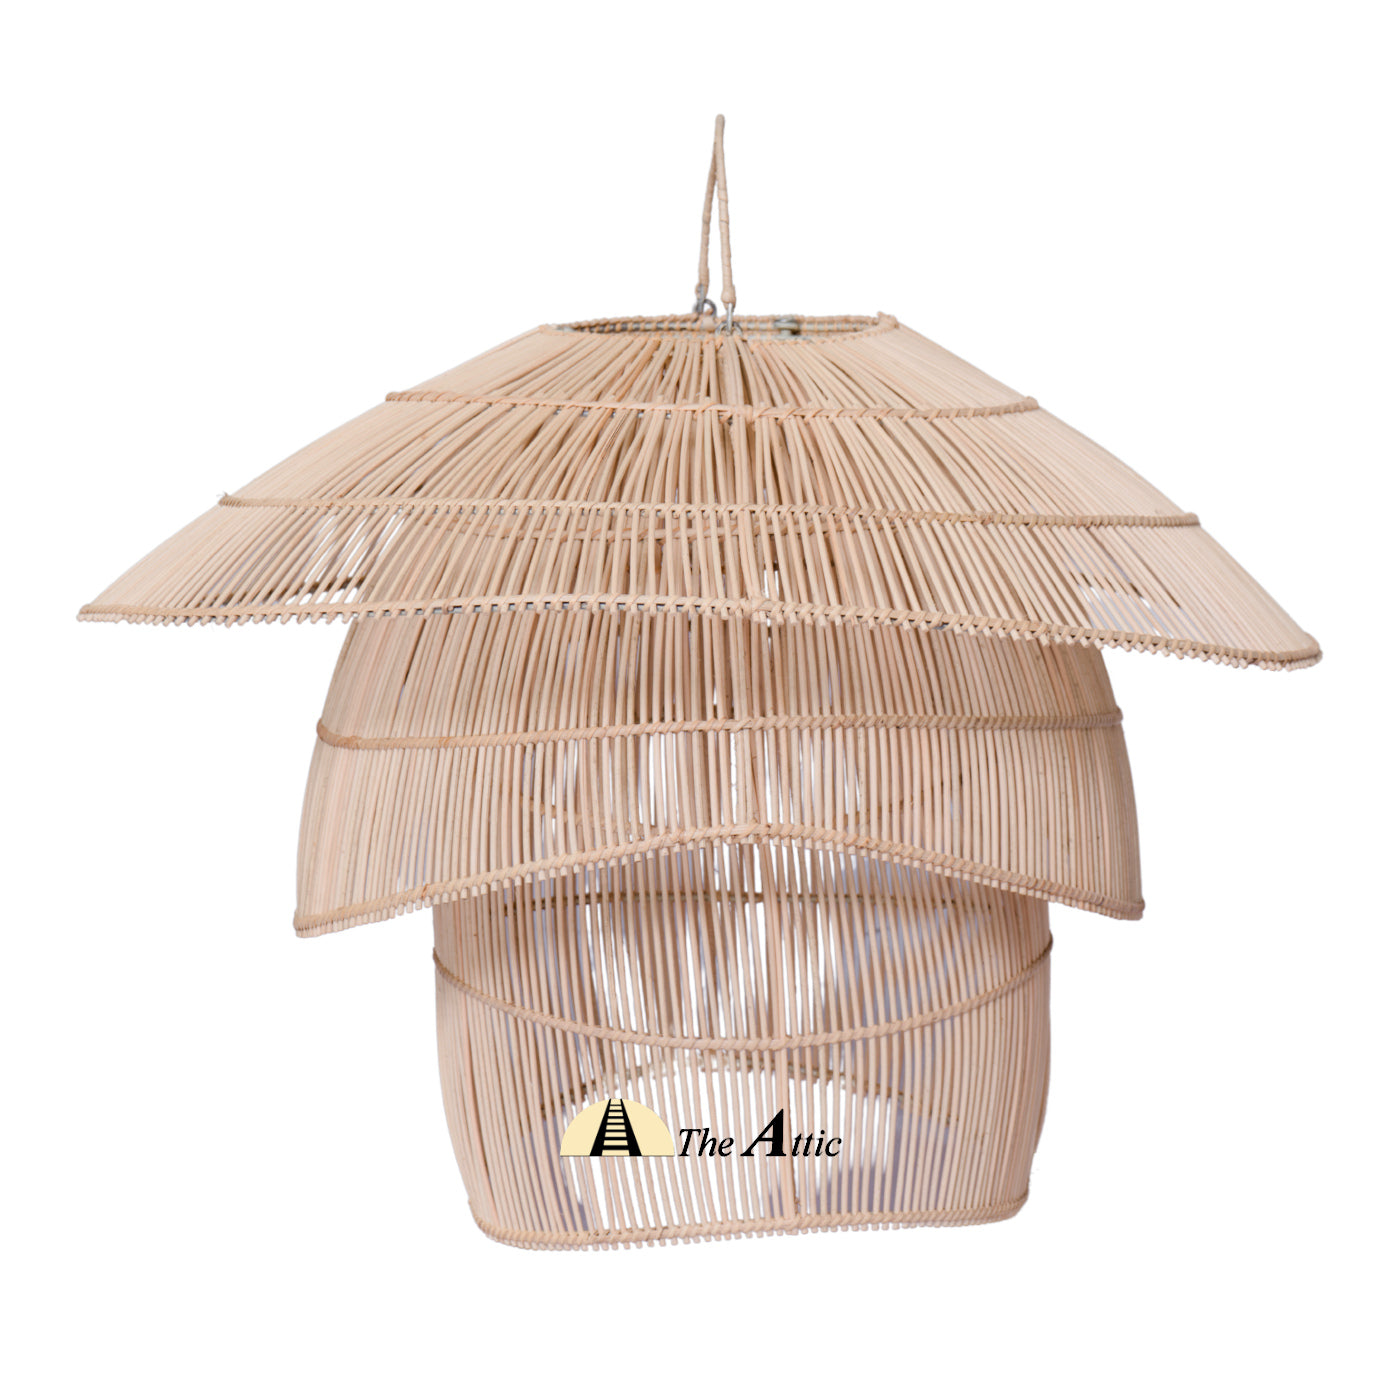 Liga Rattan Pendant, Hanging Light, Ceiling Lamp, Rattan Furniture - The Attic Dubai